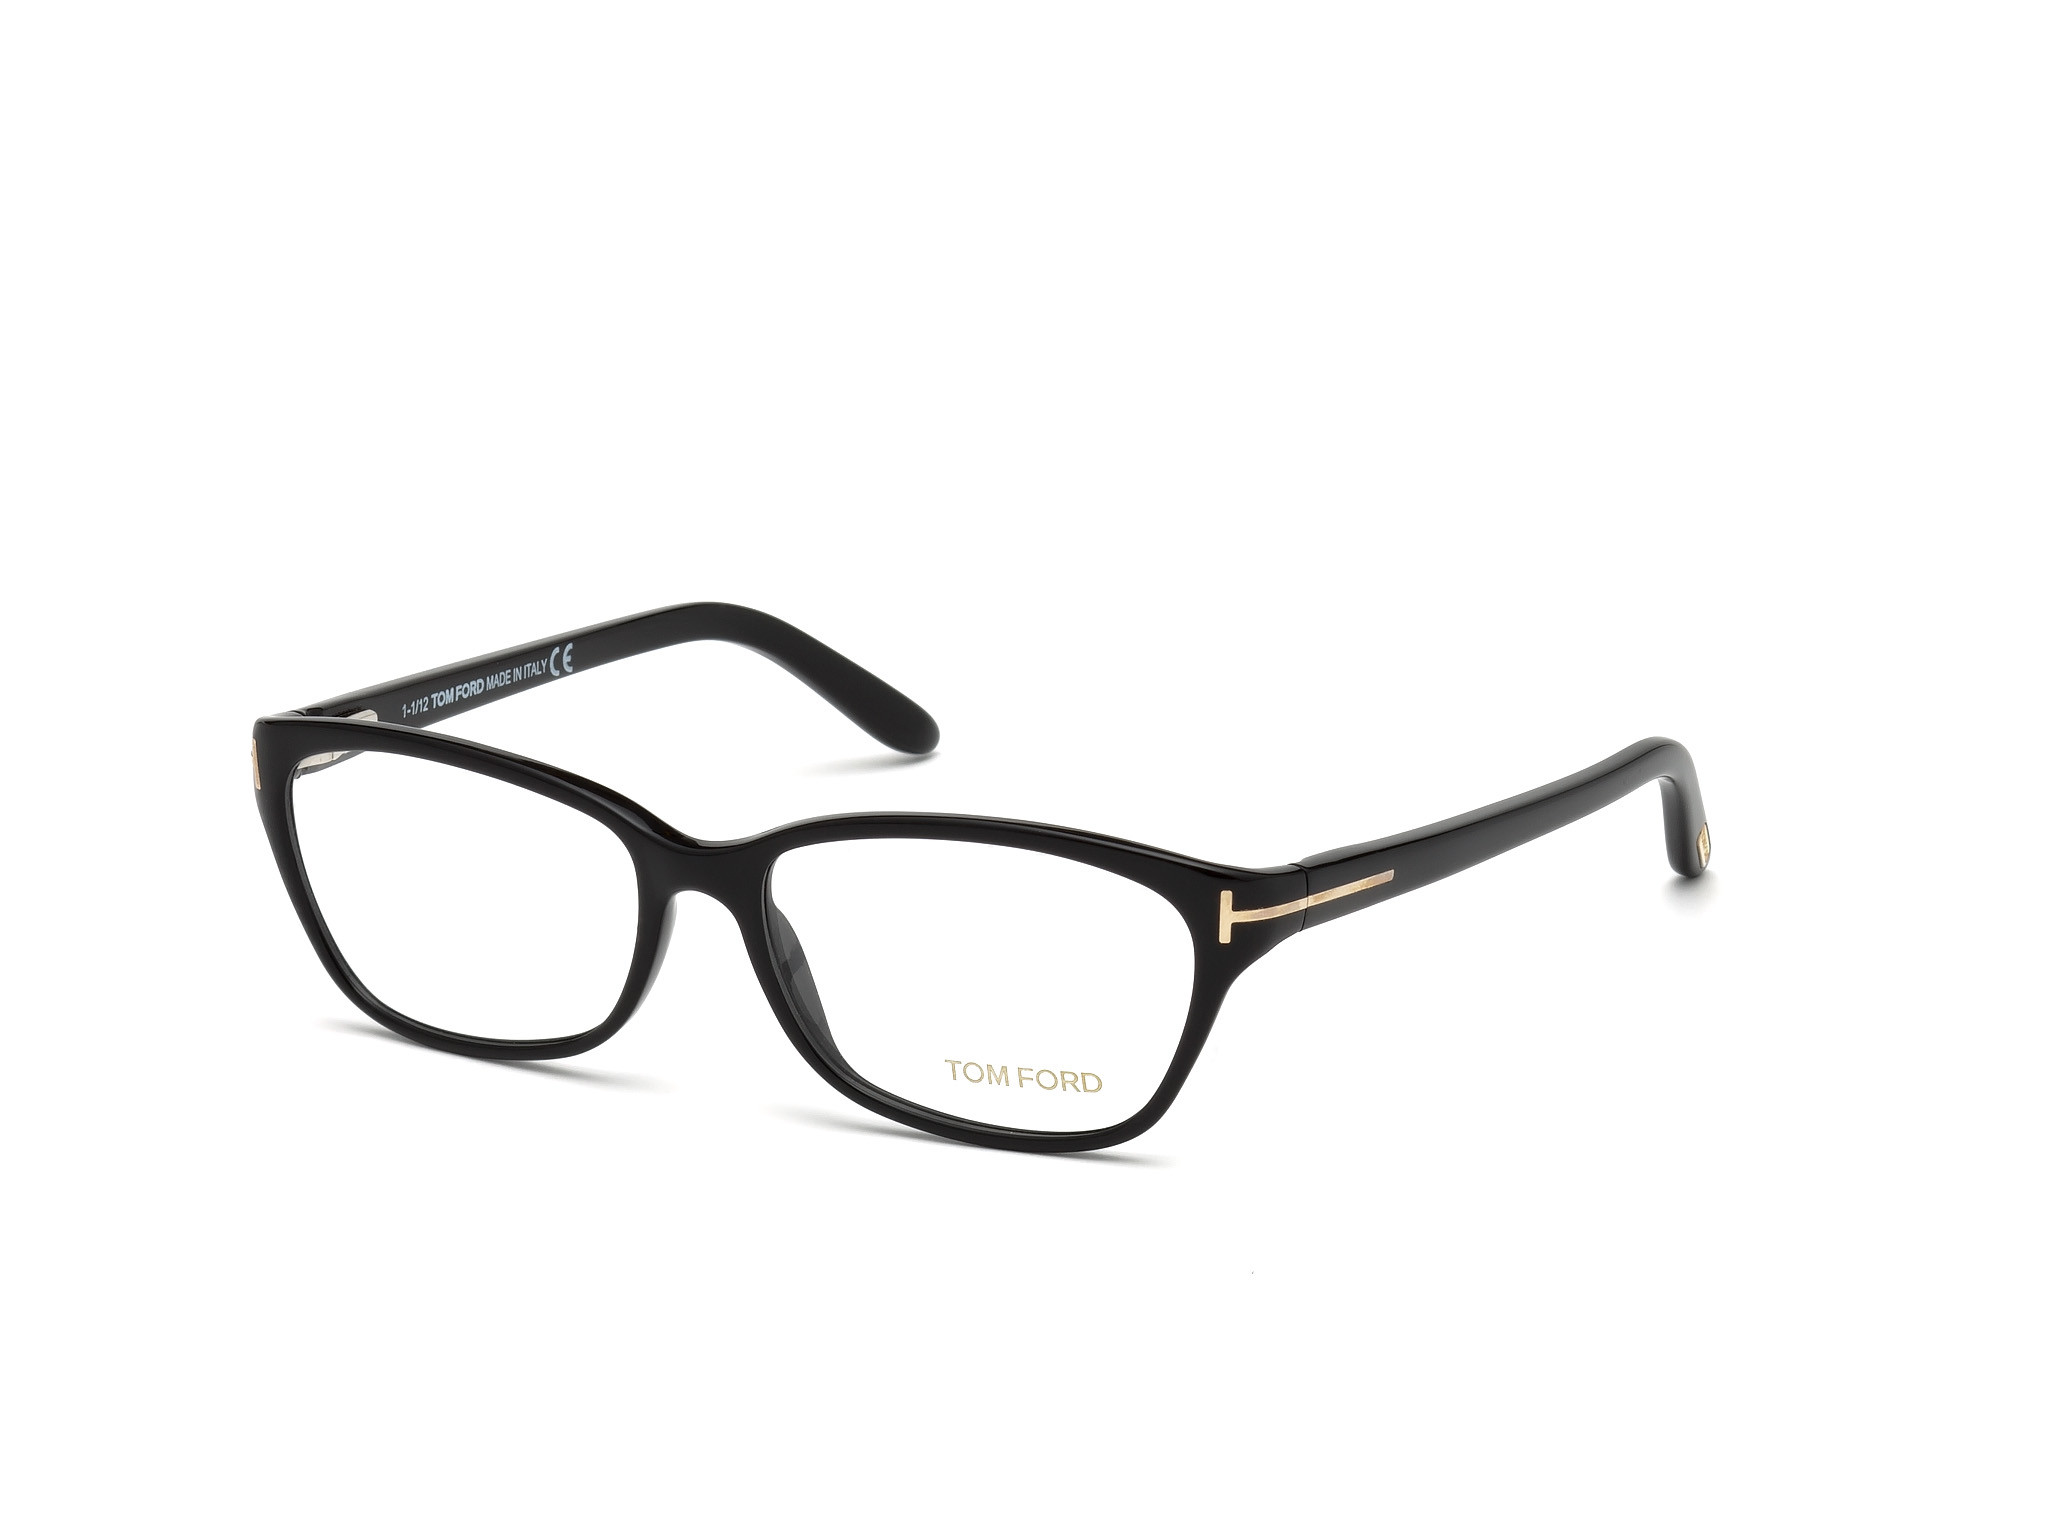 Shop Glasses Online - Paradise Canyon Eye Care, St. George, UT